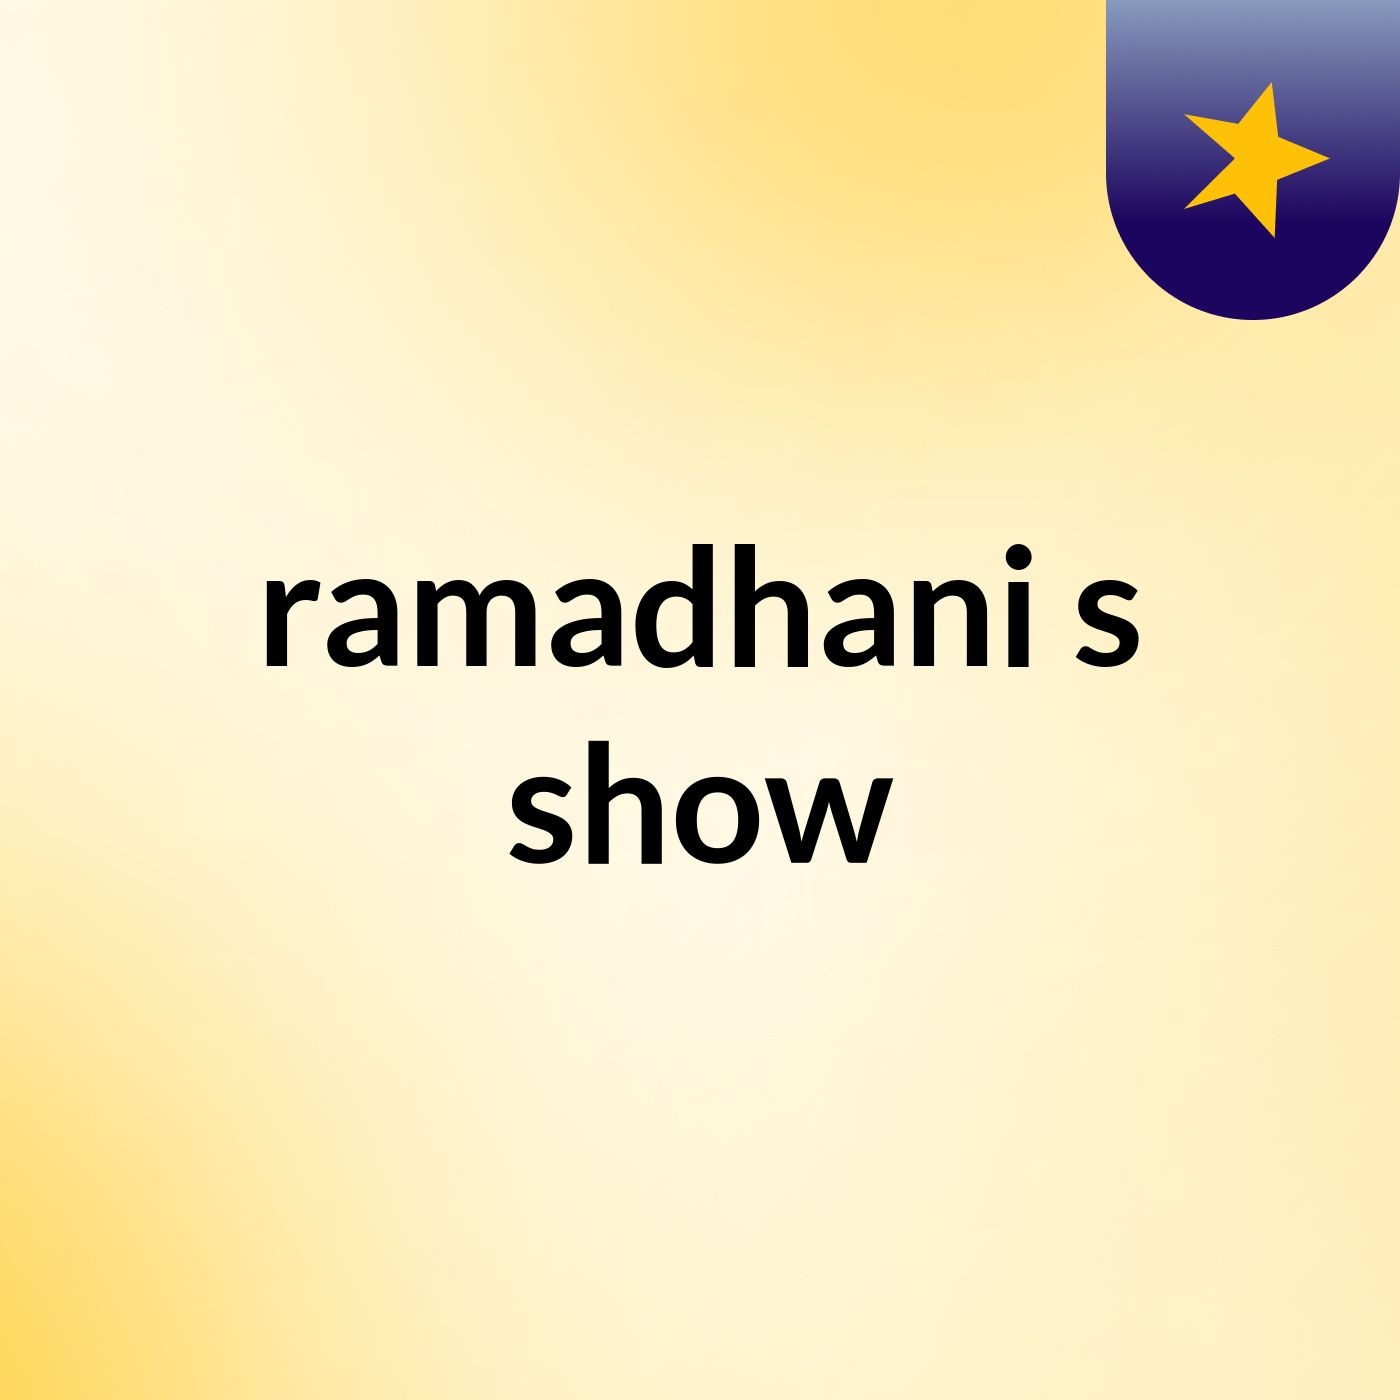 ramadhani's show